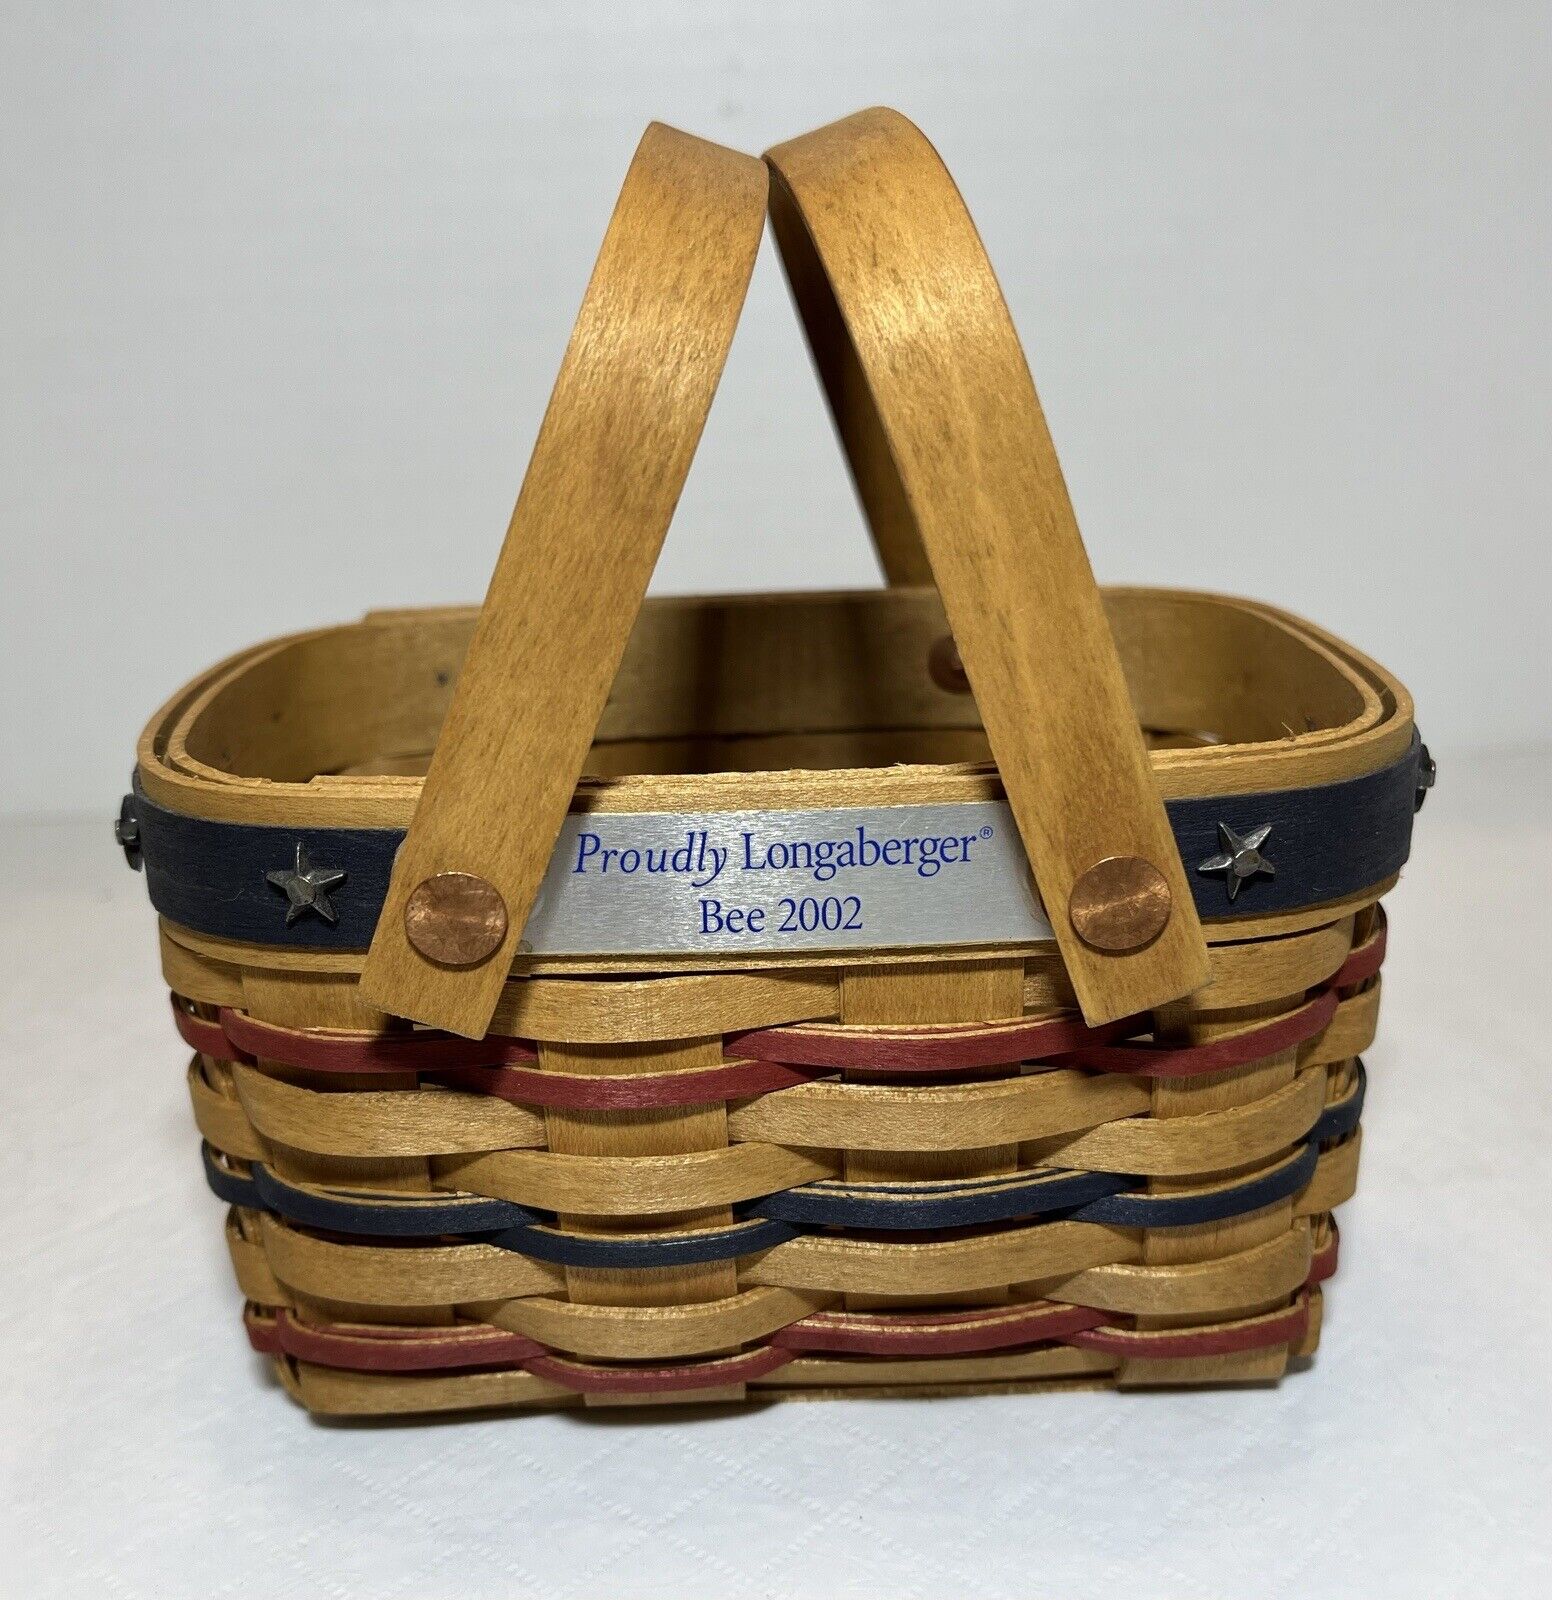 2002 Proudly Longaberger Bee Basket With Swinging Handles